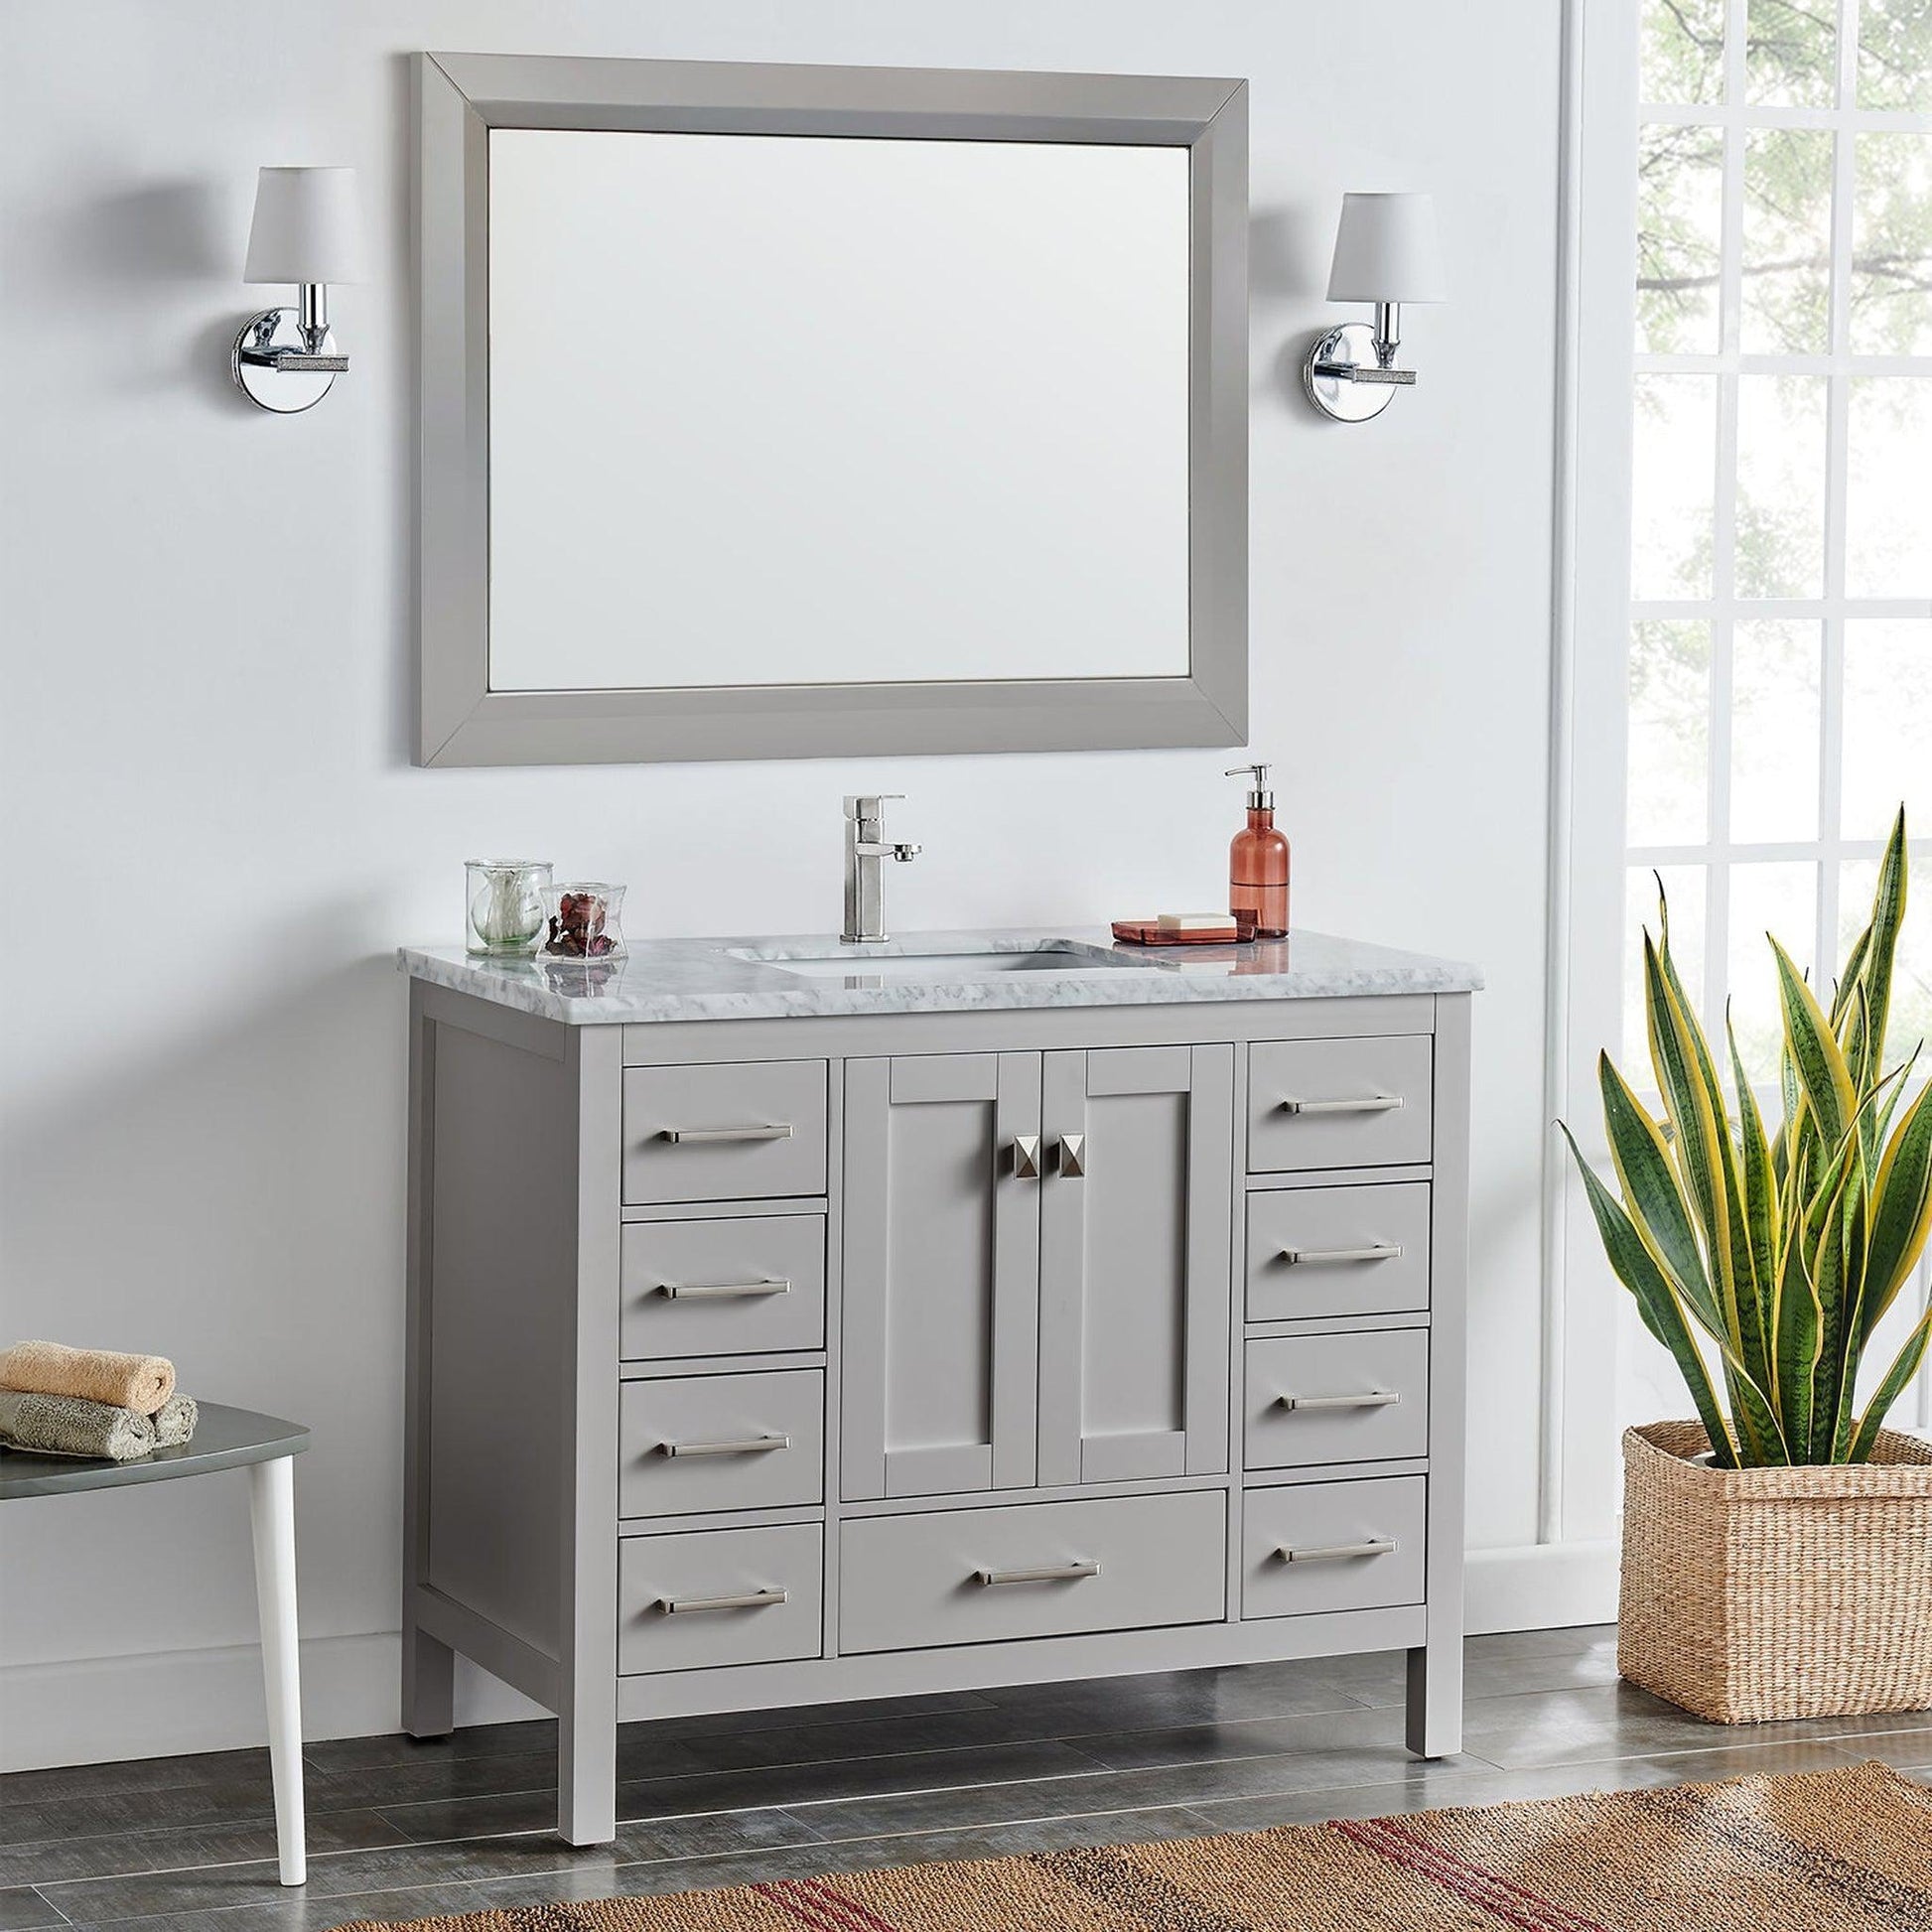 Eviva London 42" x 34" Gray Freestanding Bathroom Vanity With Carrara Marble Countertop and Single Undermount Sink